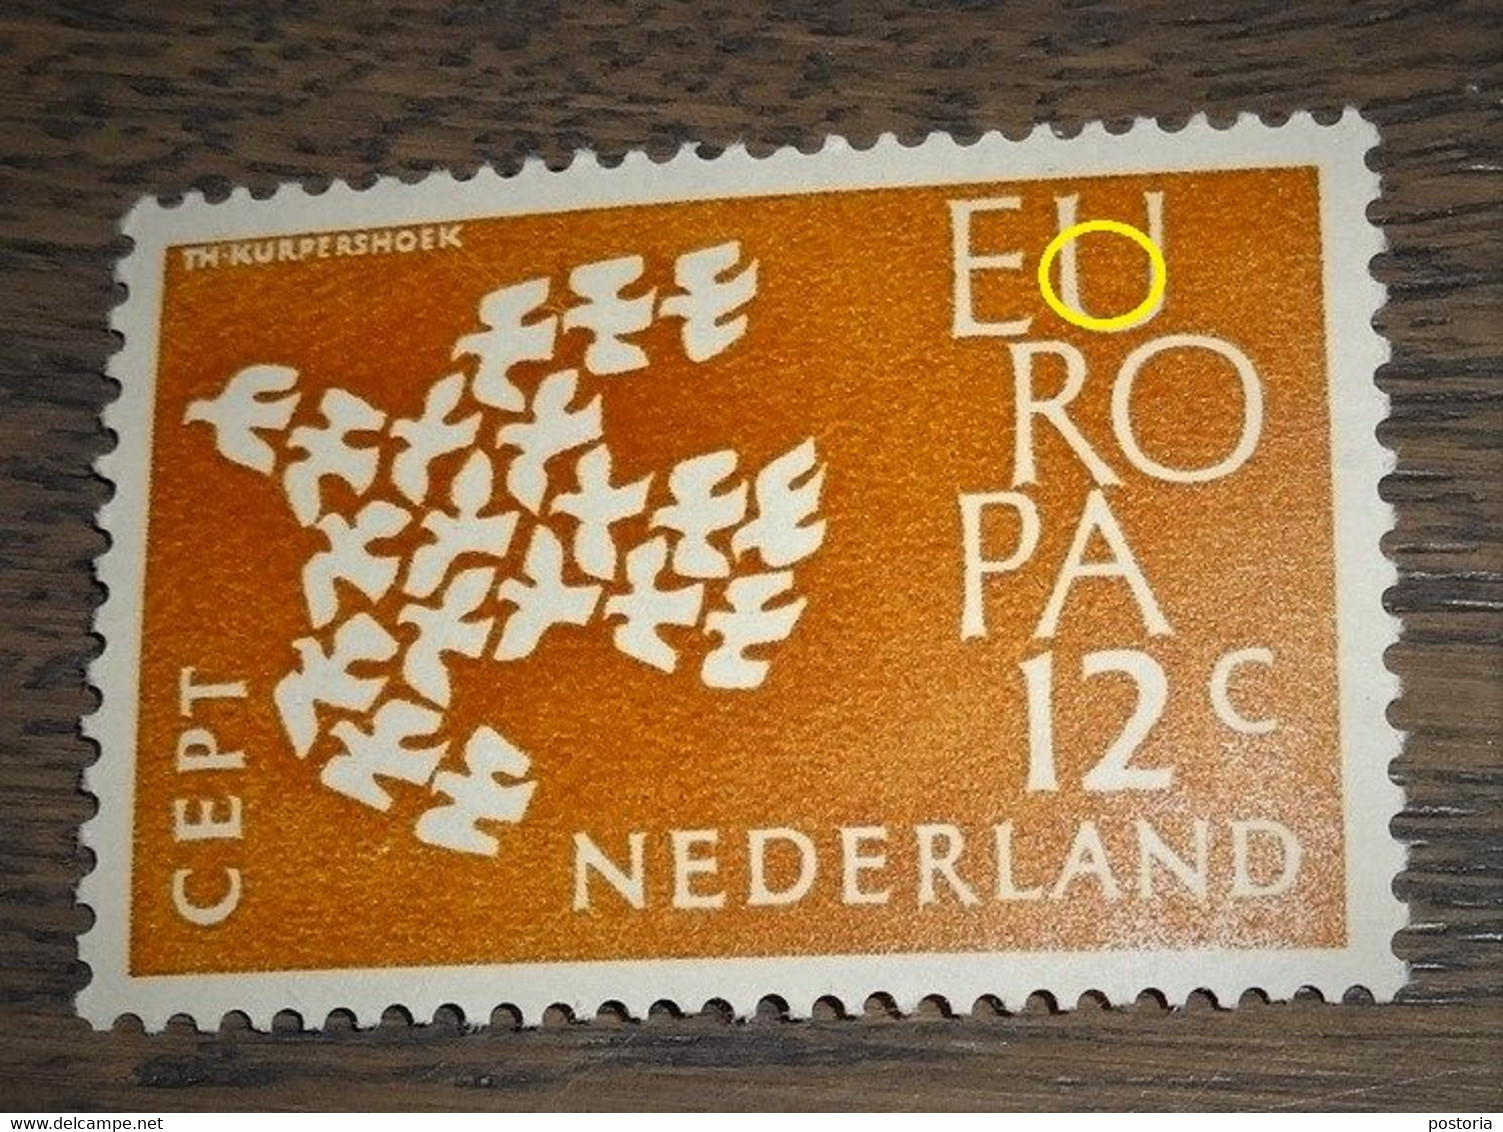 Nederland - MAST - 757 PM1 - 1961 - Plaatfout - Postfris - Vlek In U Van EU - Plaatfouten En Curiosa